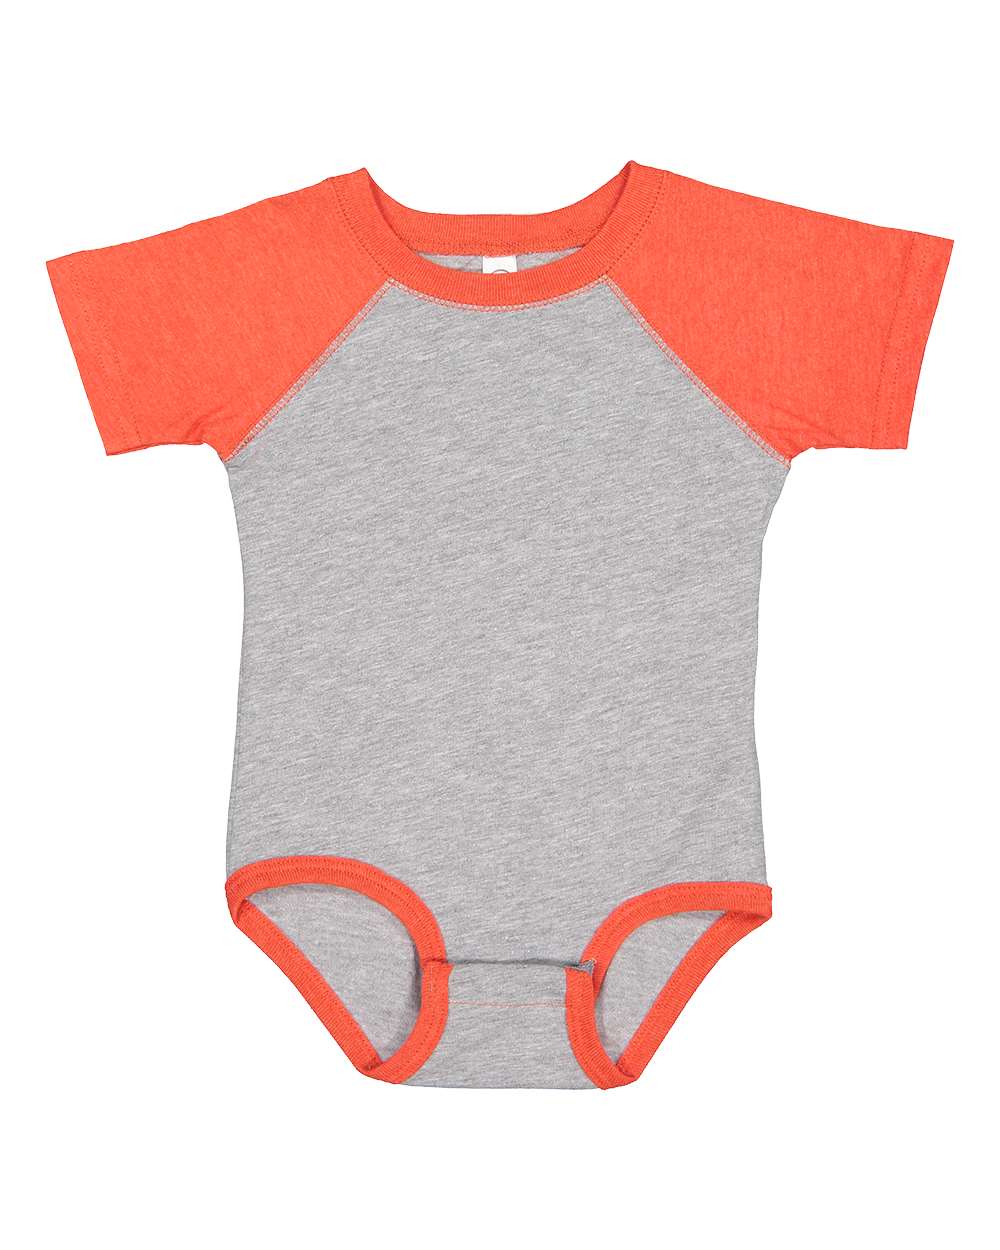 rabbit skins infant baseball jersey bodysuit onesie vintage heather grey vintage orange